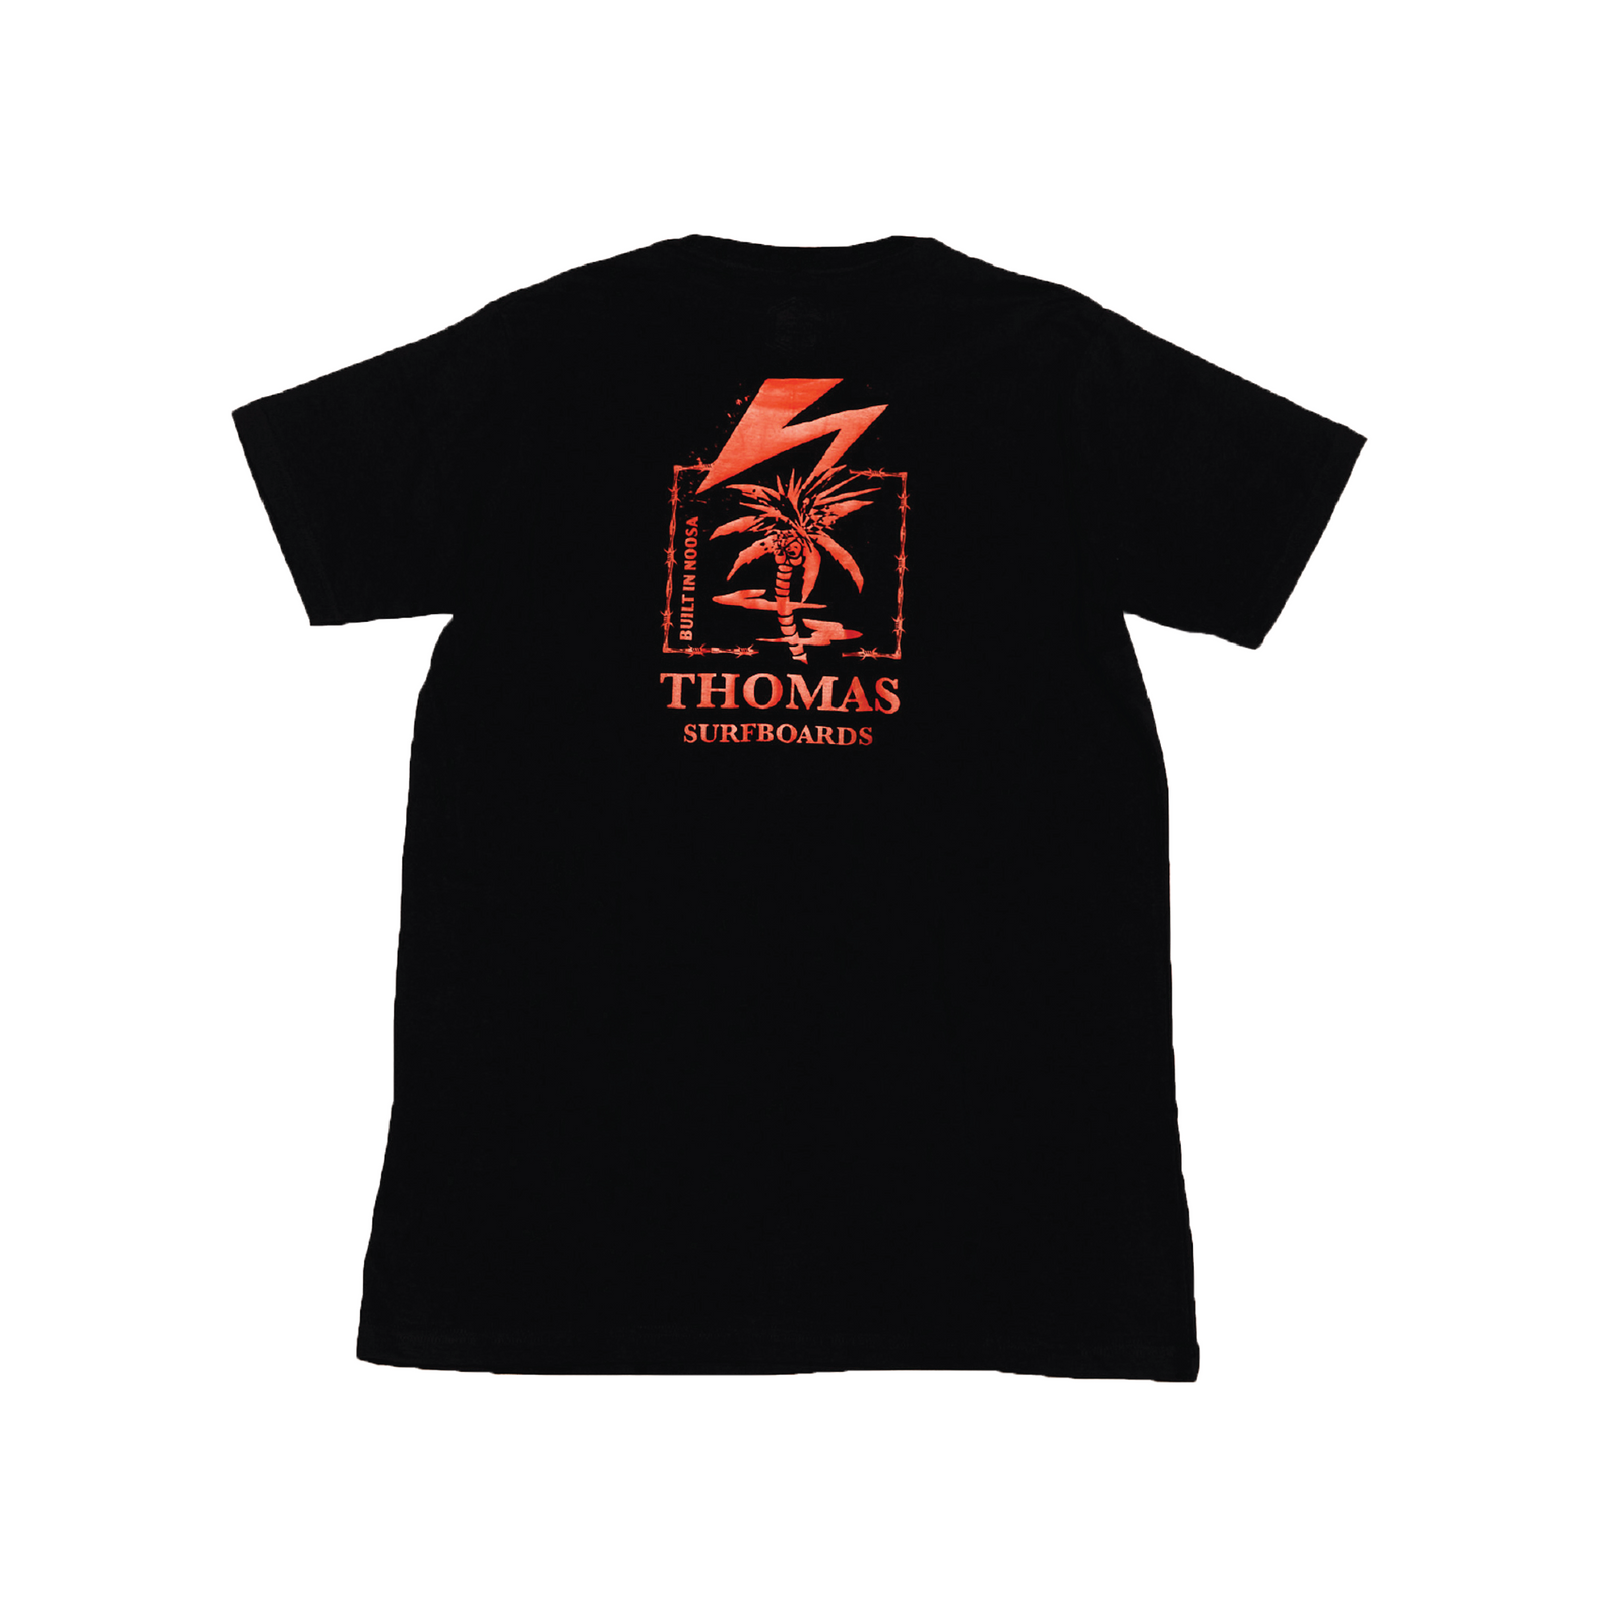 Thomas Palm Lightning T-Shirt Black